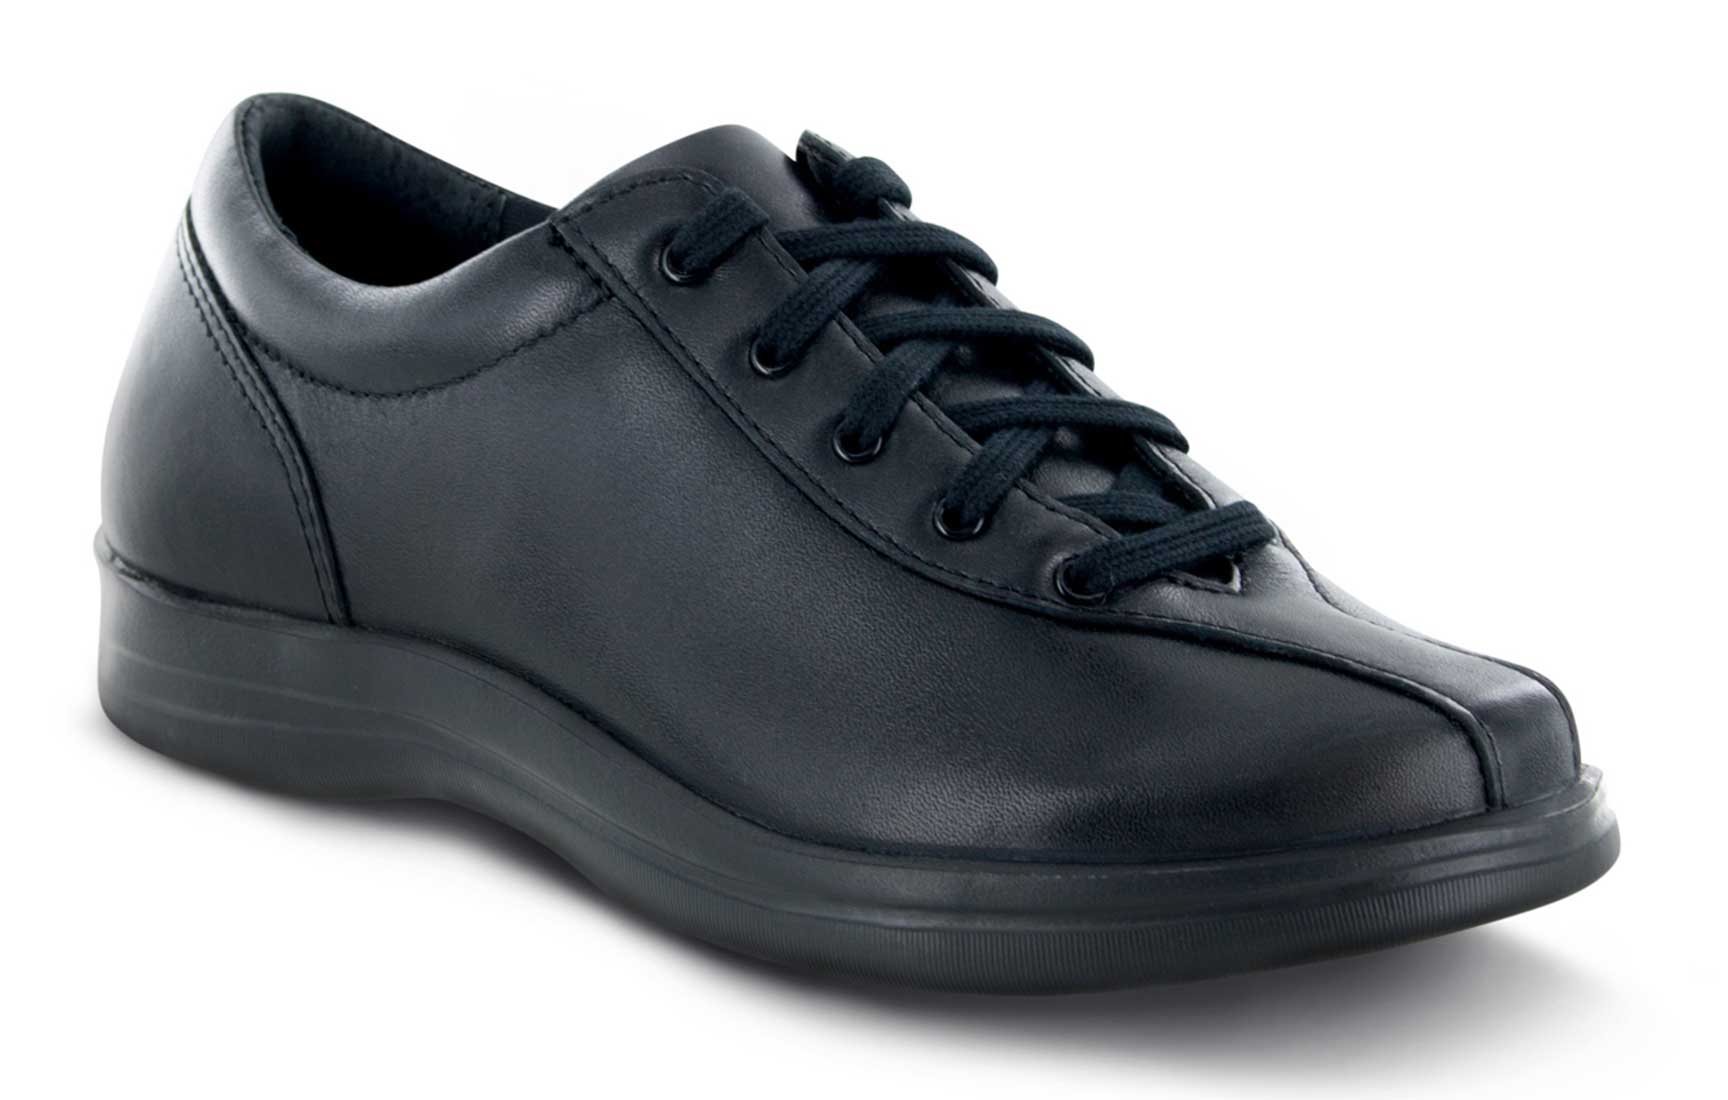 Apex Petals Liv A400W Casual Walking Shoe - Women's Comfort Therapeutic Diabetic Shoe - Extra Depth For Orthotics